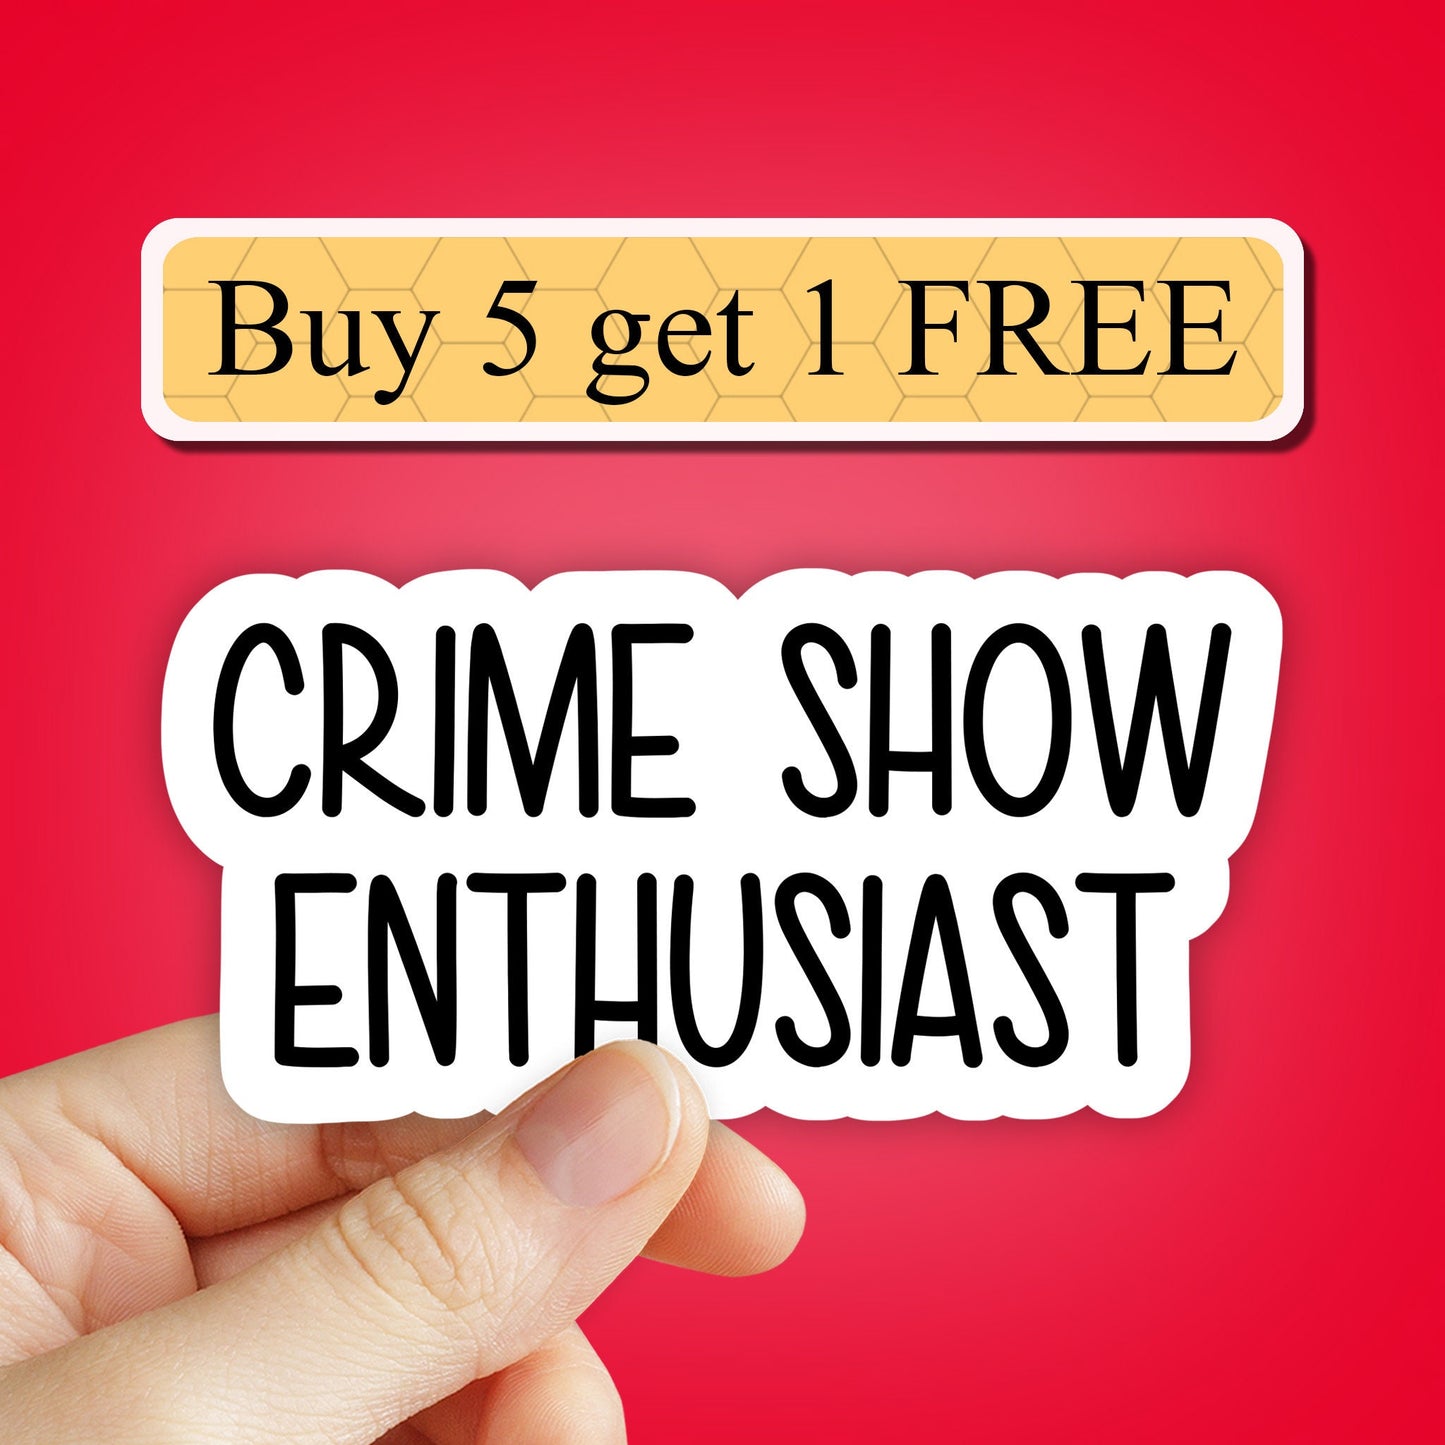 Crime show enthusiast sticker, true crime stickers, true crime podcast sticker, True crime junkie sticker, trending stickers, laptop decal